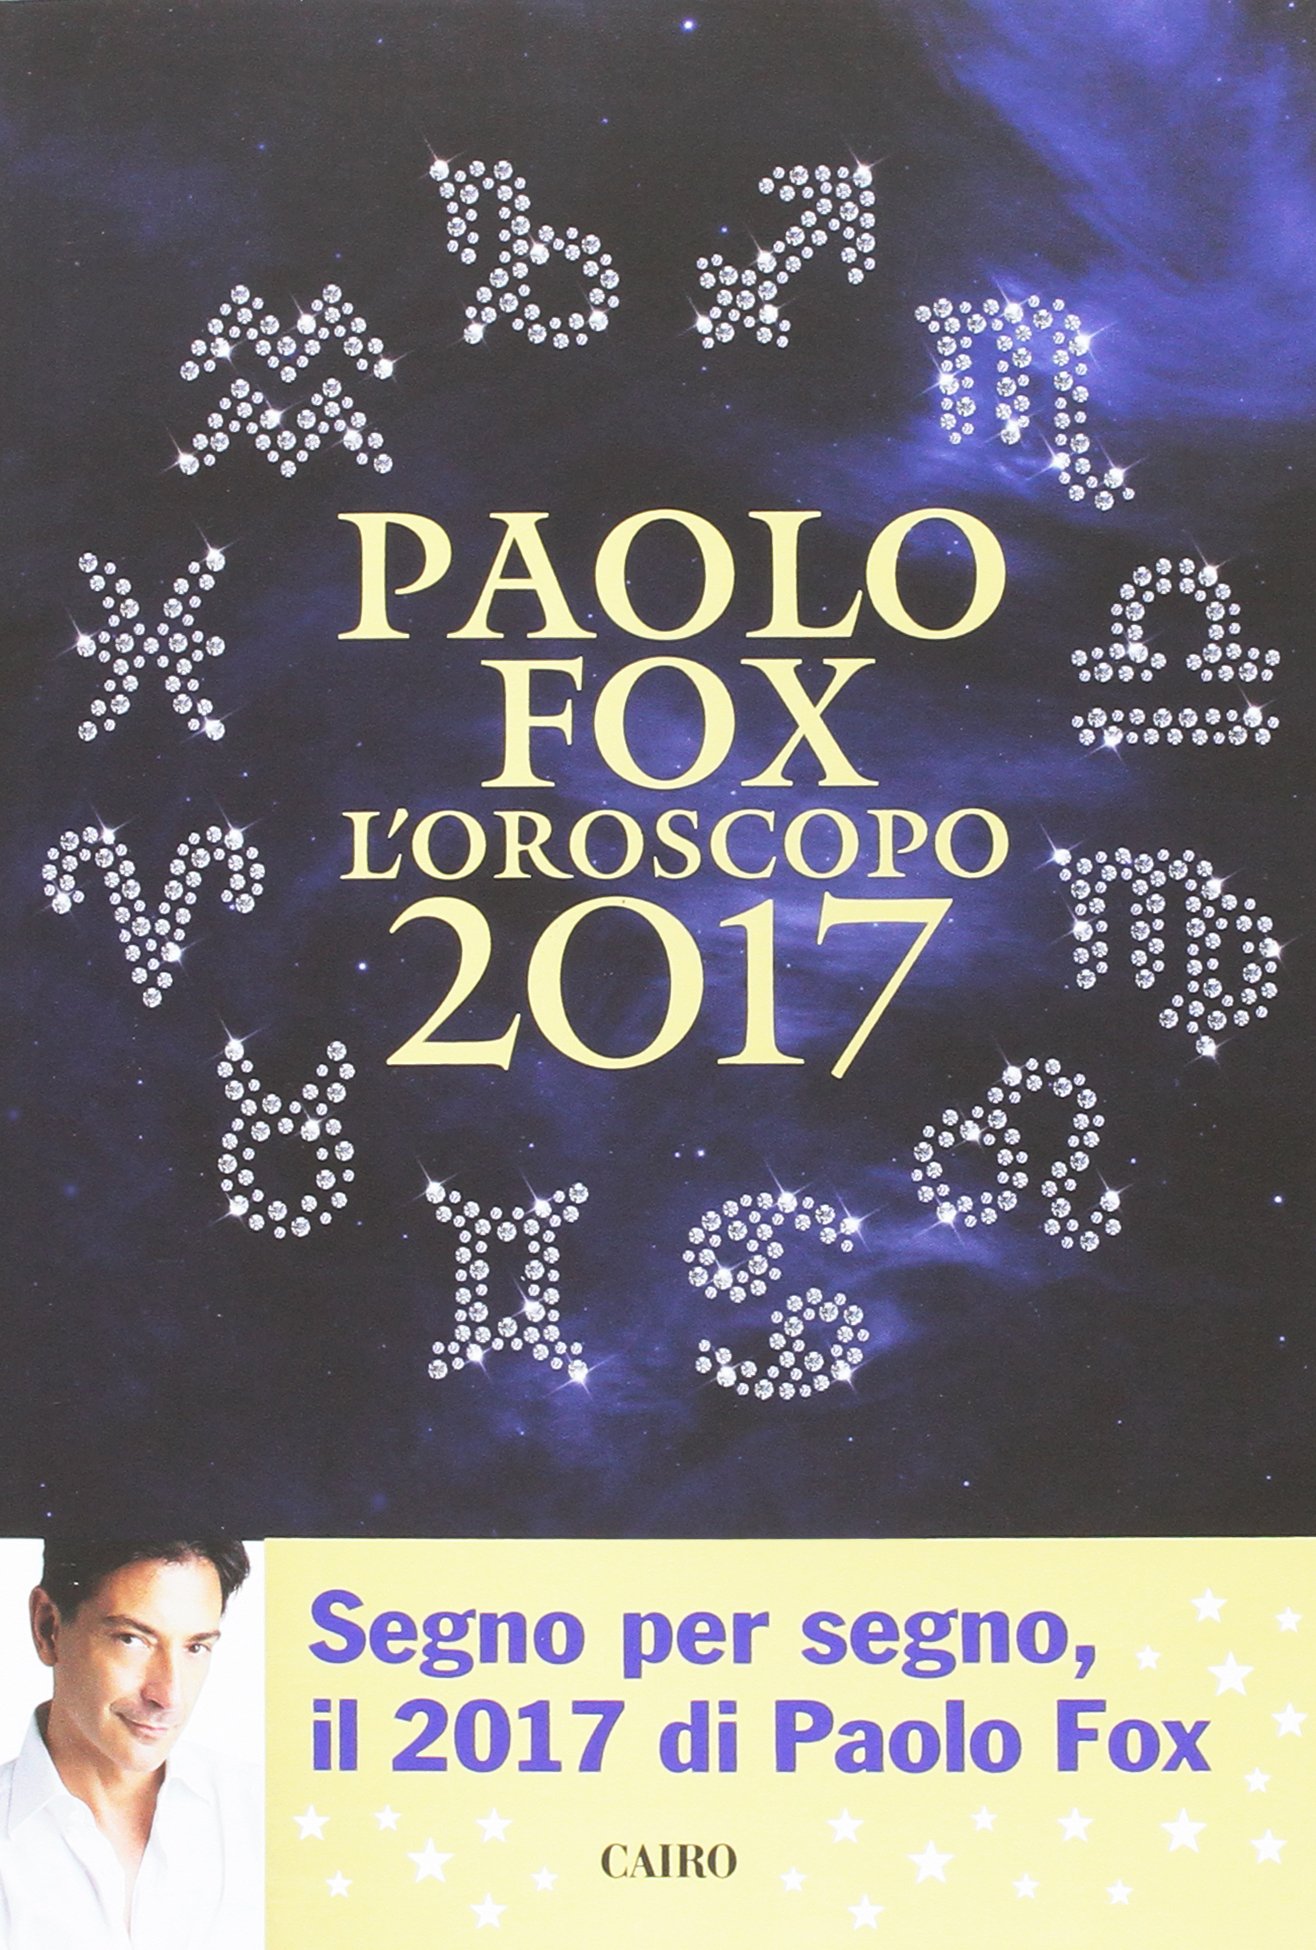 Oroscopo 2017, libri